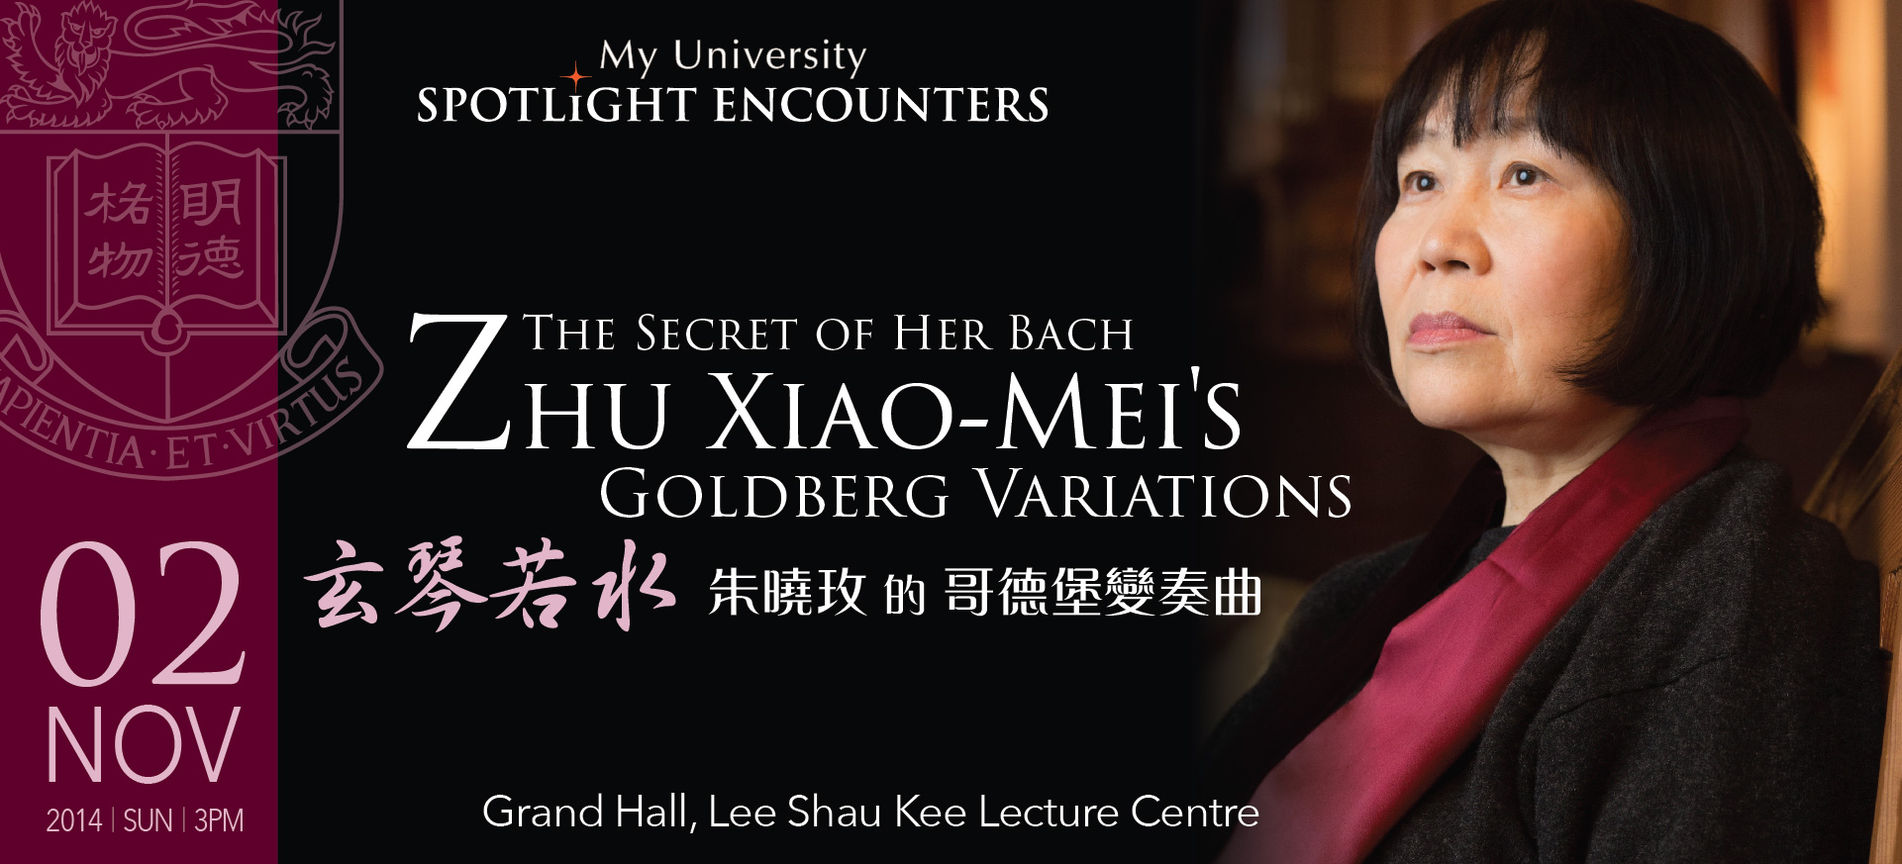 The Secret of Her Bach: Zhu Xiao-Mei's Goldberg Variations 